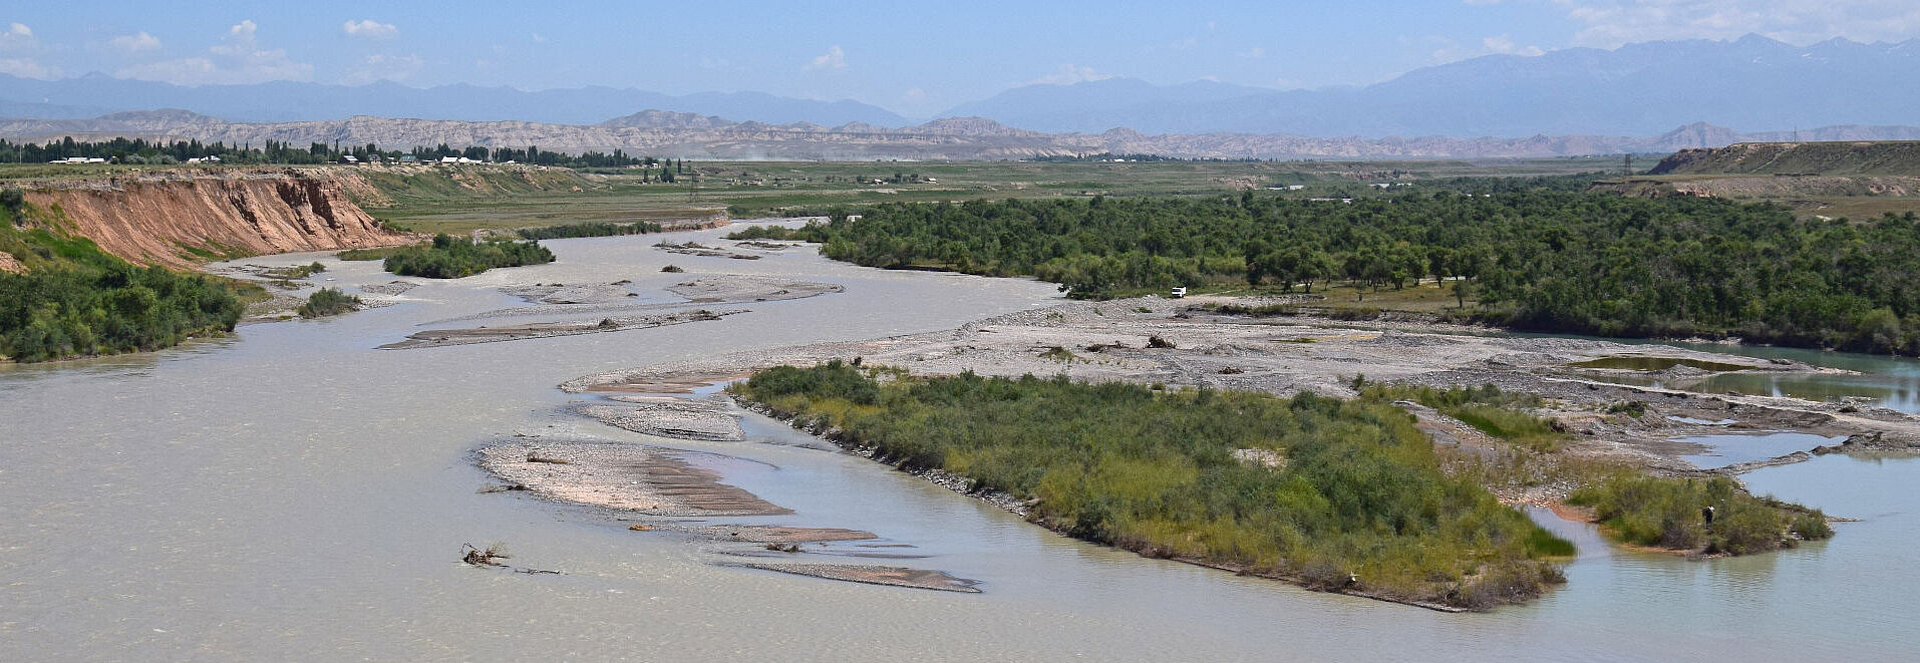 The Naryn River Floodplains in Kyrgyzstan